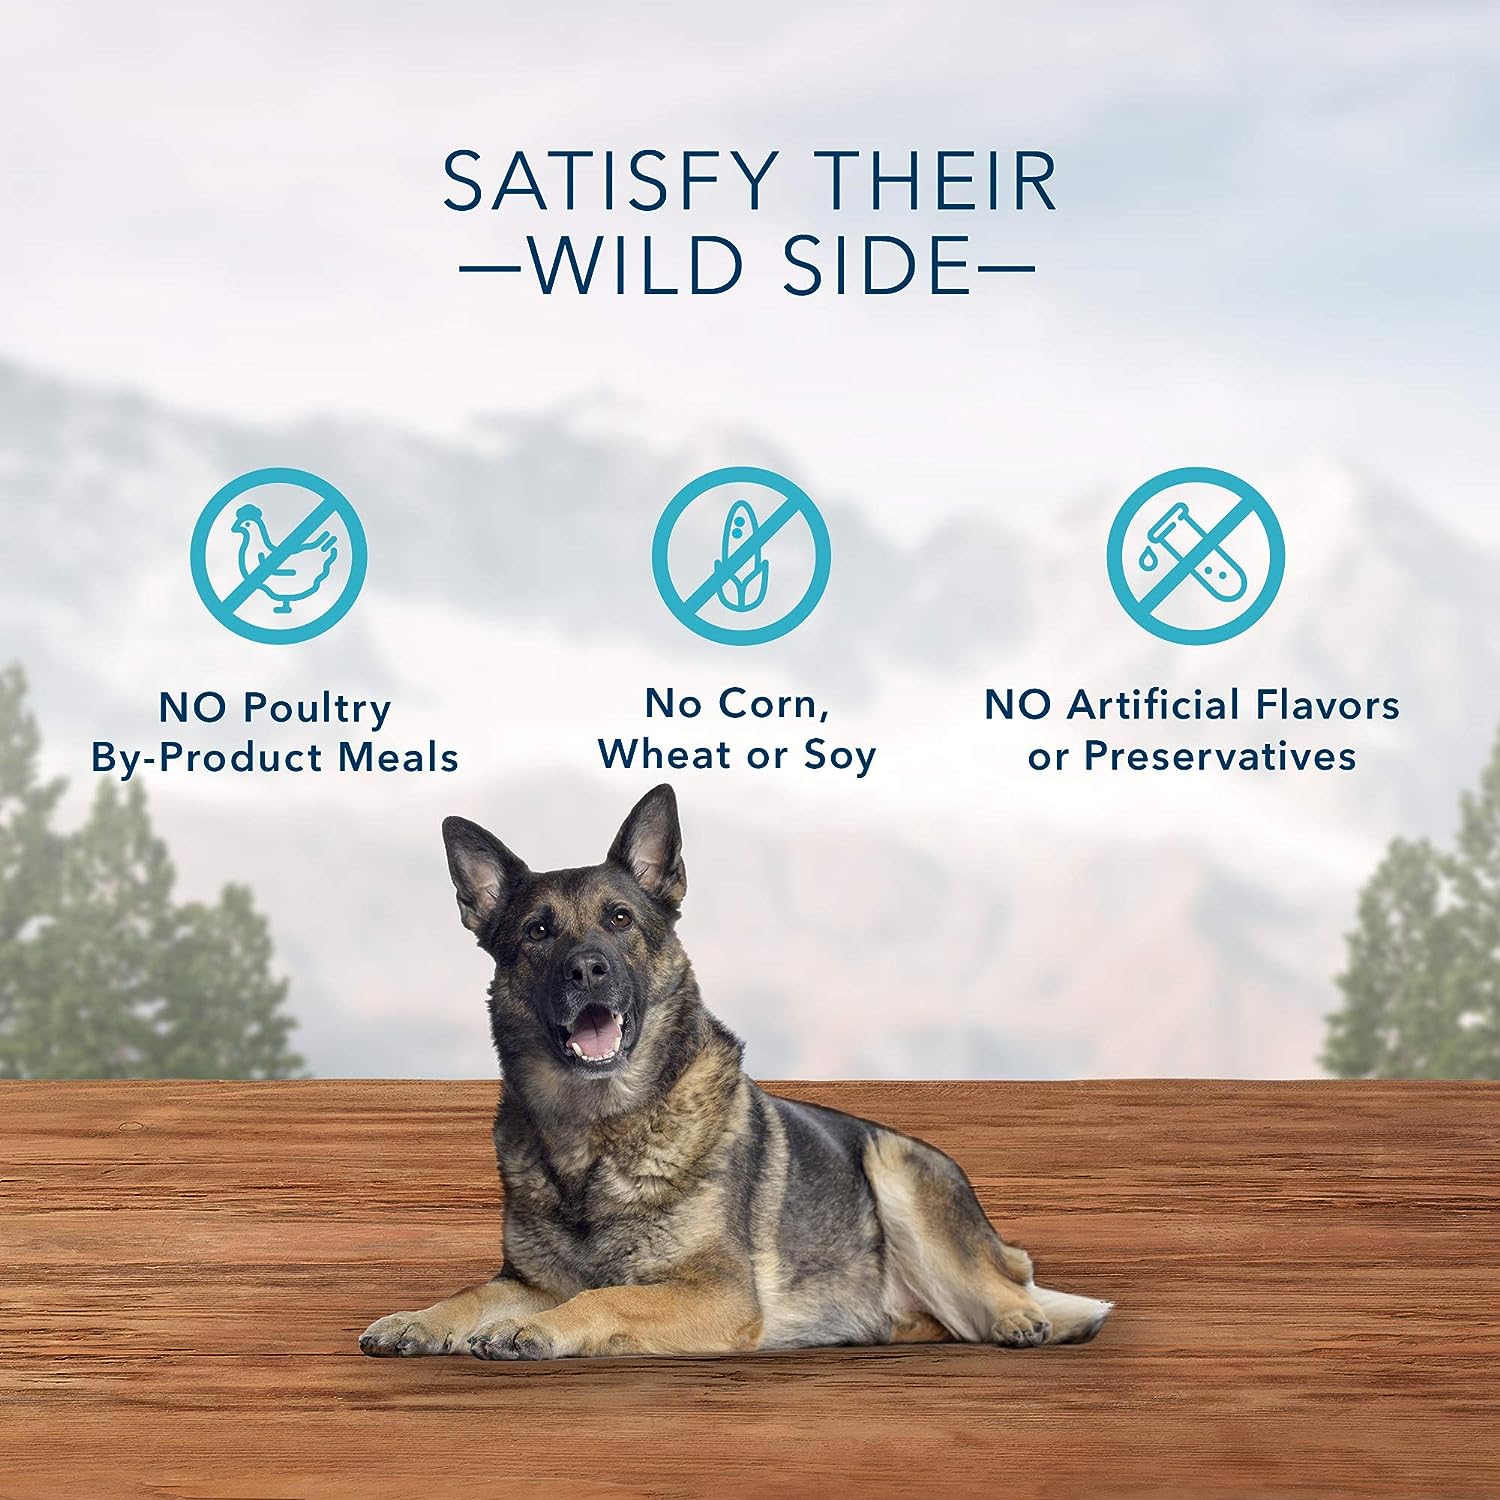 Blue Buffalo Wilderness Wild Bones Grain Free Dental Chews Dog Treats, Large 27-oz Bag